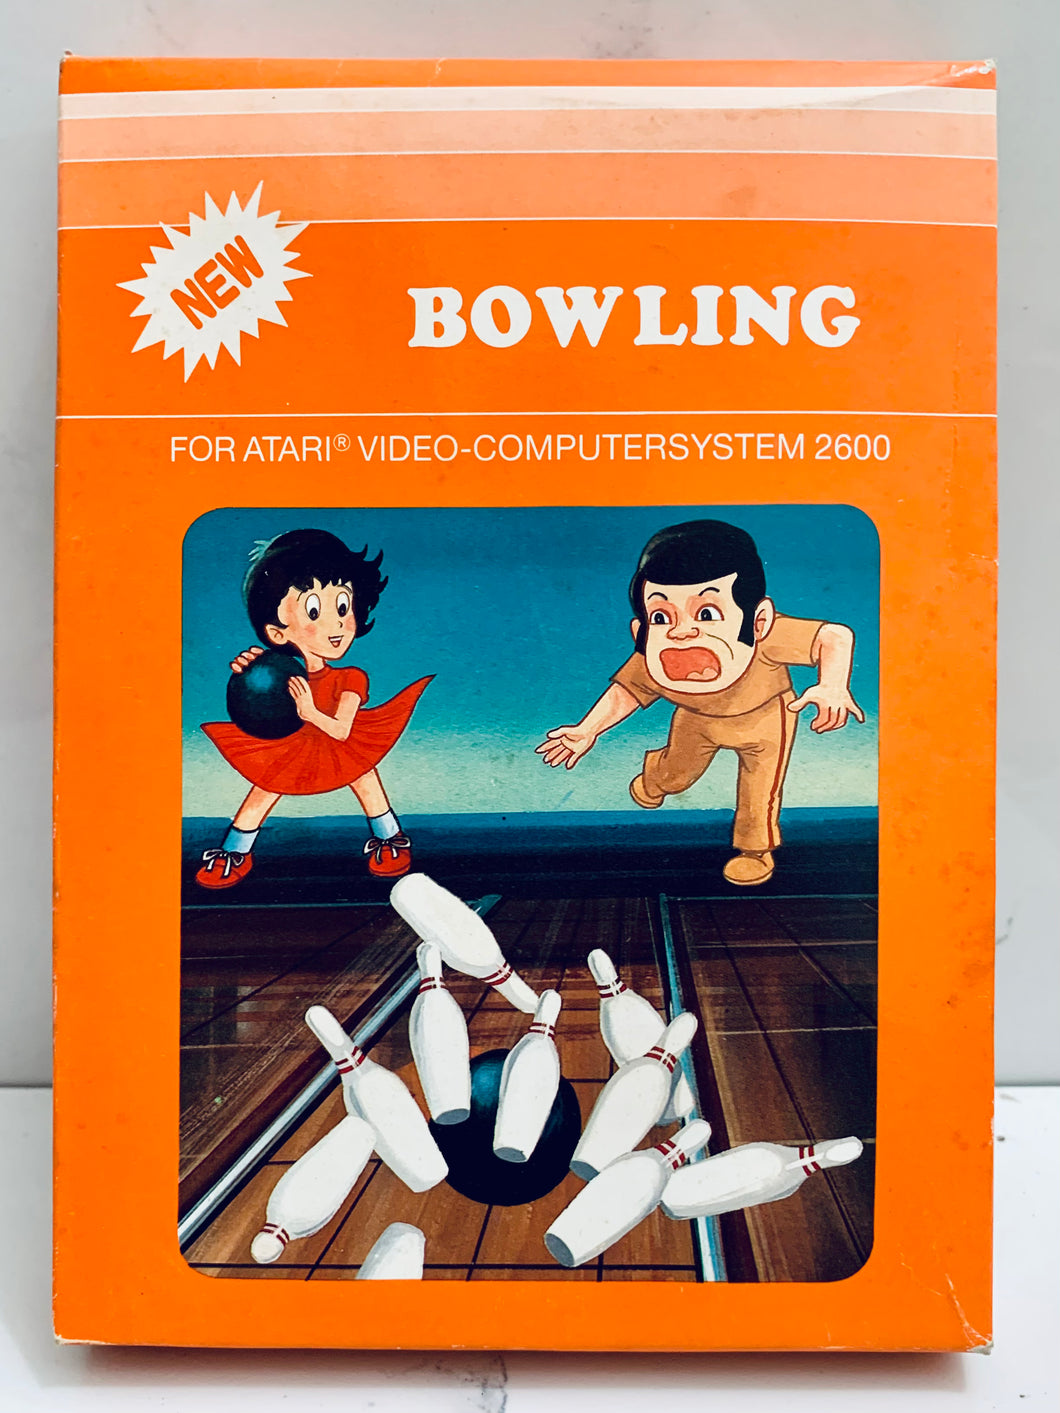 Bowling - Atari VCS 2600 - NTSC - CIB